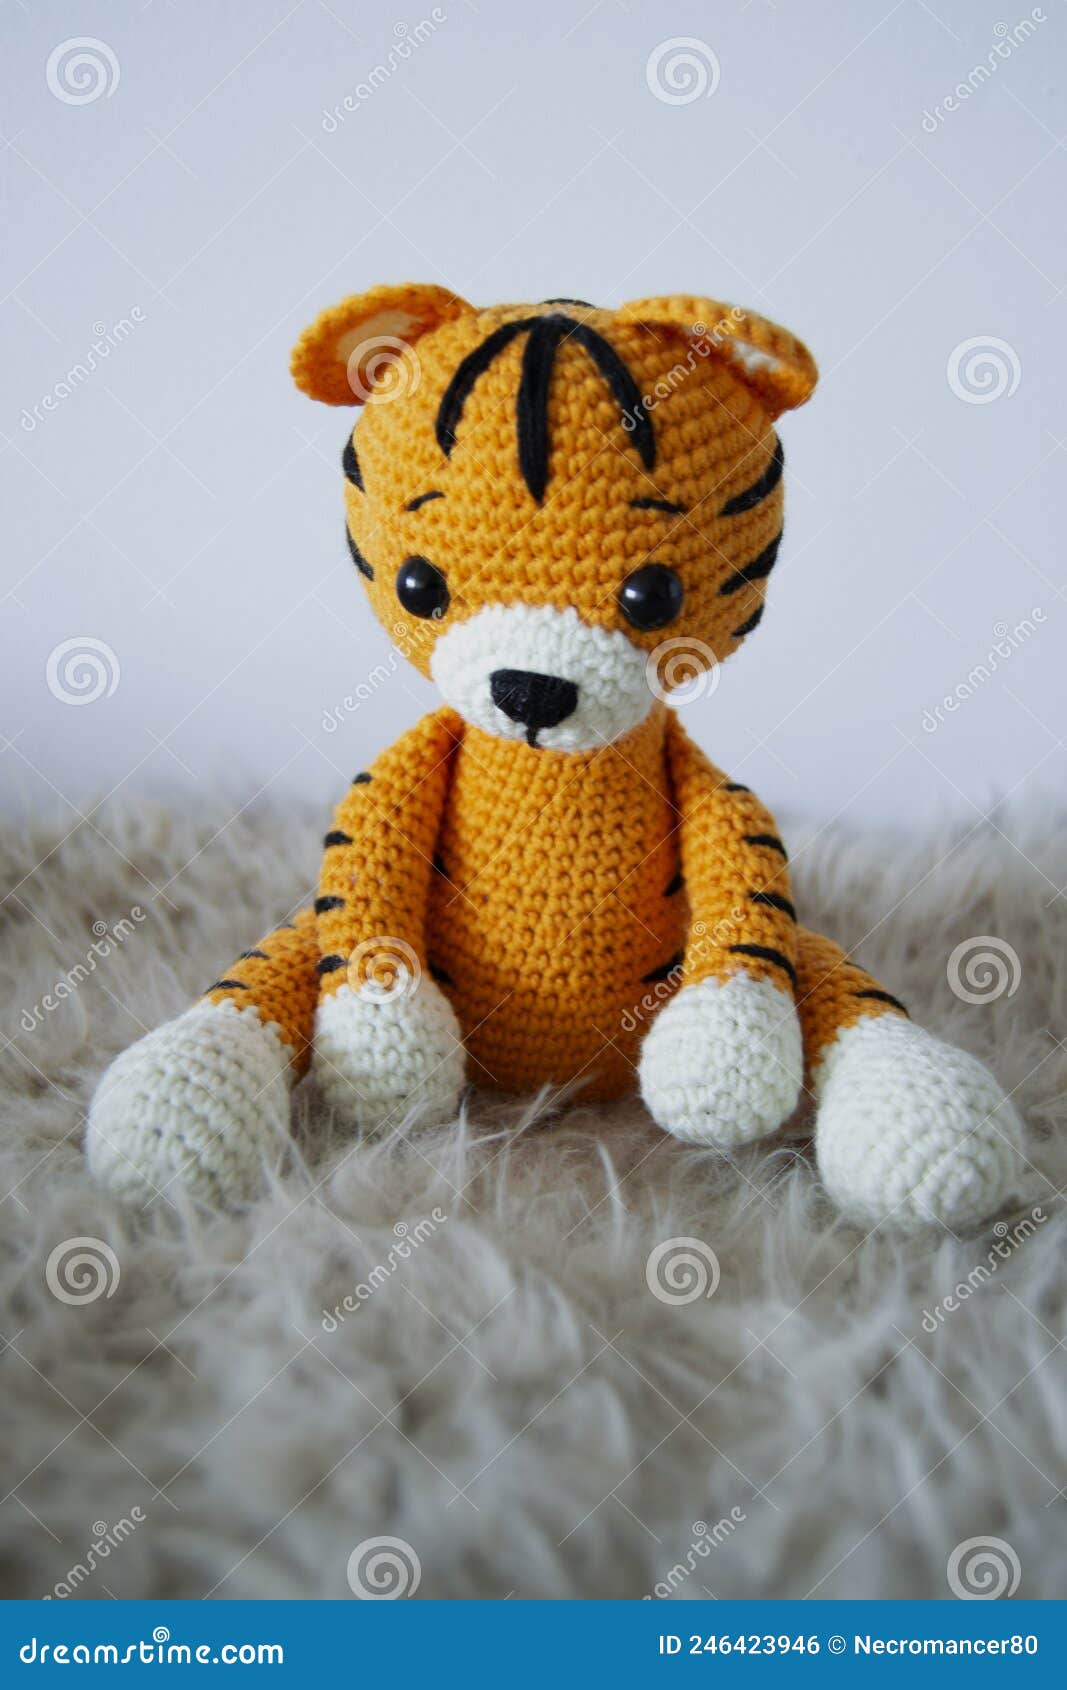 tigre amigurumi. crochet stuffed animal. ecofriendly toy